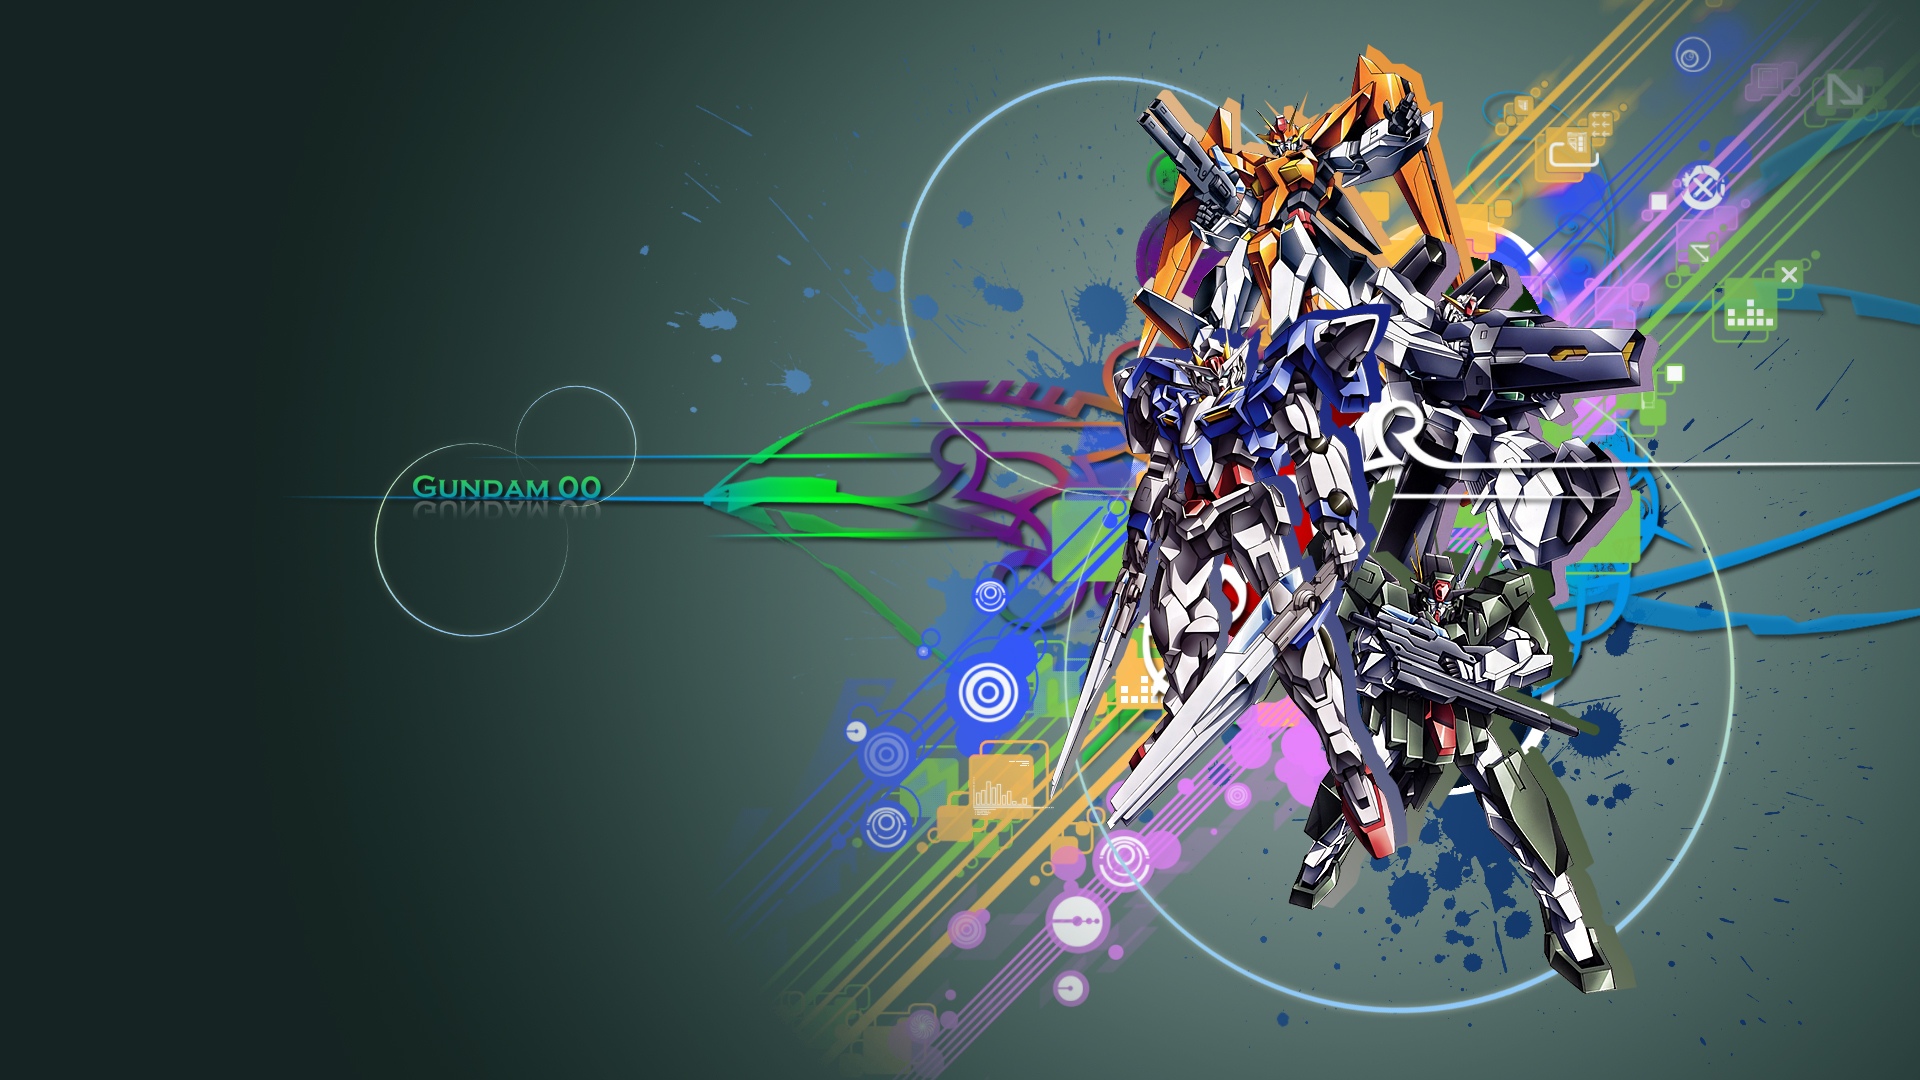 Oo Gundam Wallpaper 1080p 19x1080 Wallpaper Teahub Io